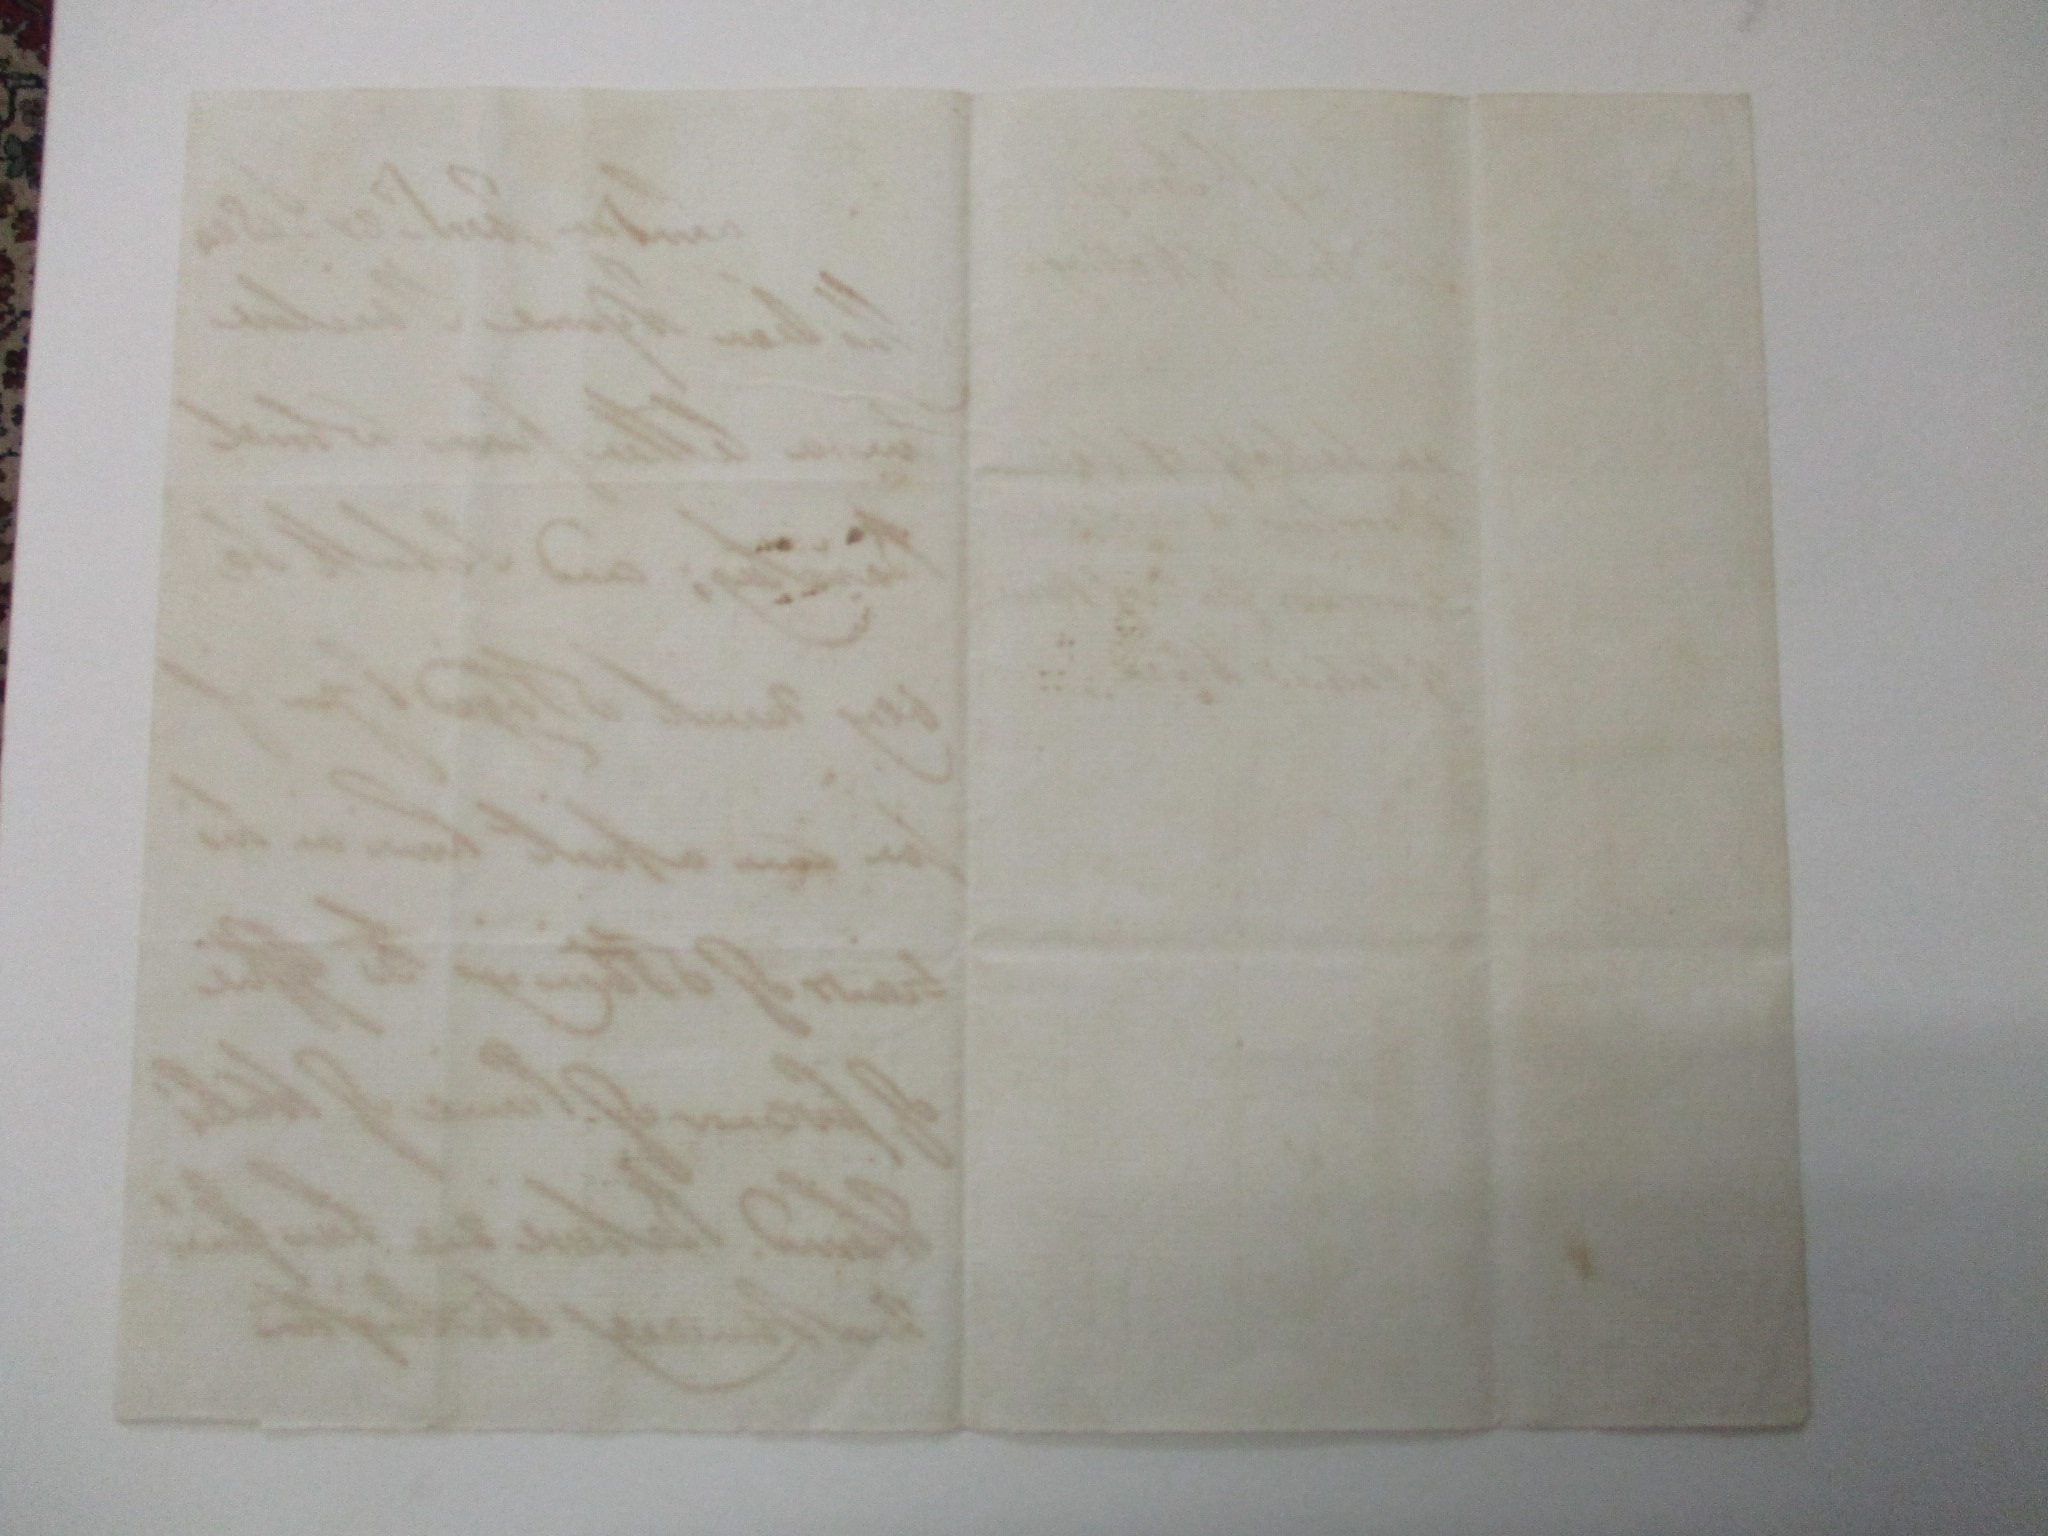 A signed Duke of Wellington letter - Image 4 of 4